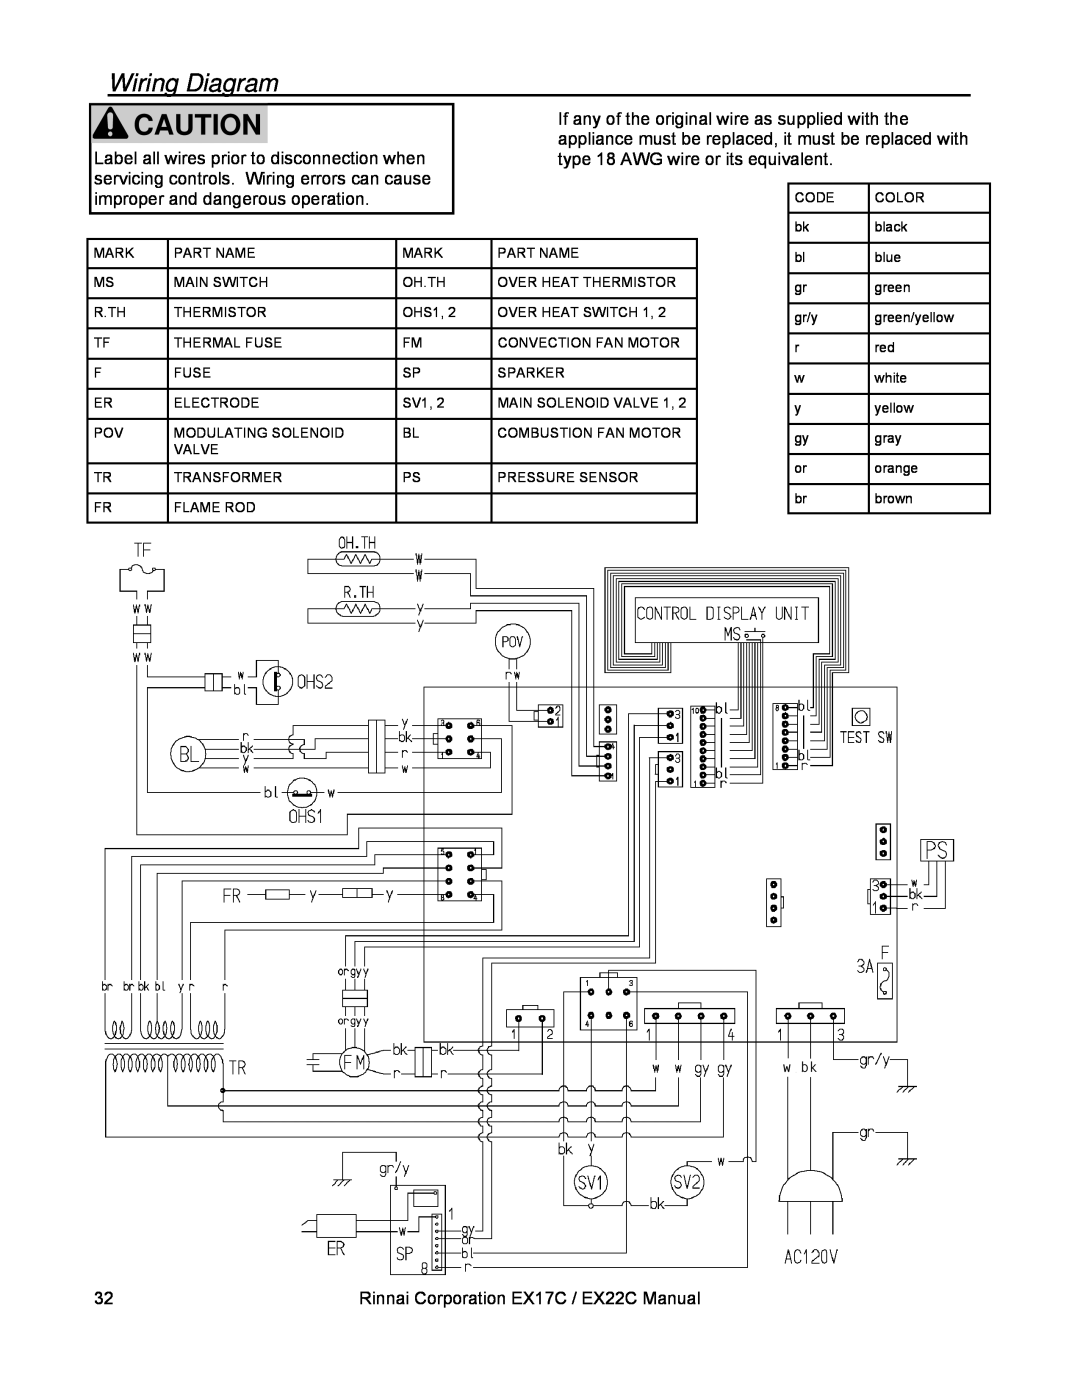 Rinnai EX22C (RHFE-559FTA), EX17C (RHFE-434FTA) Wiring Diagram, If any of the original wire as supplied with the, w bk 